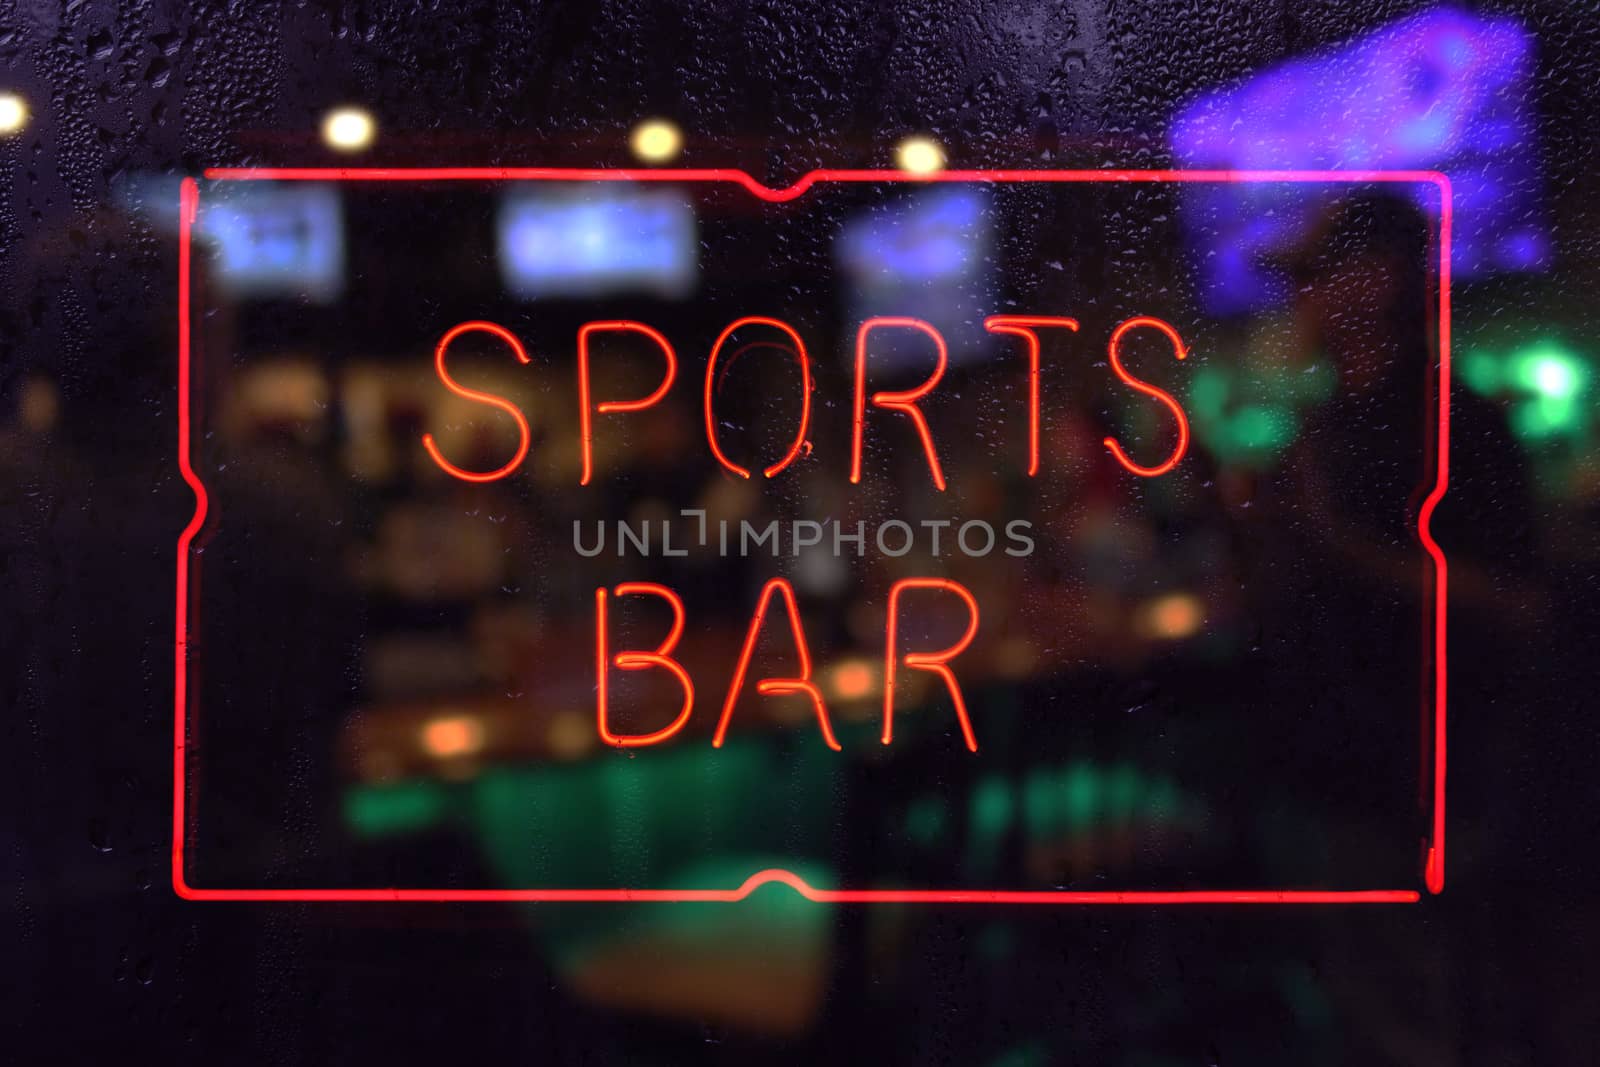 Neon Sports Bar Sign, Rainy Window Blur Image by Marti157900